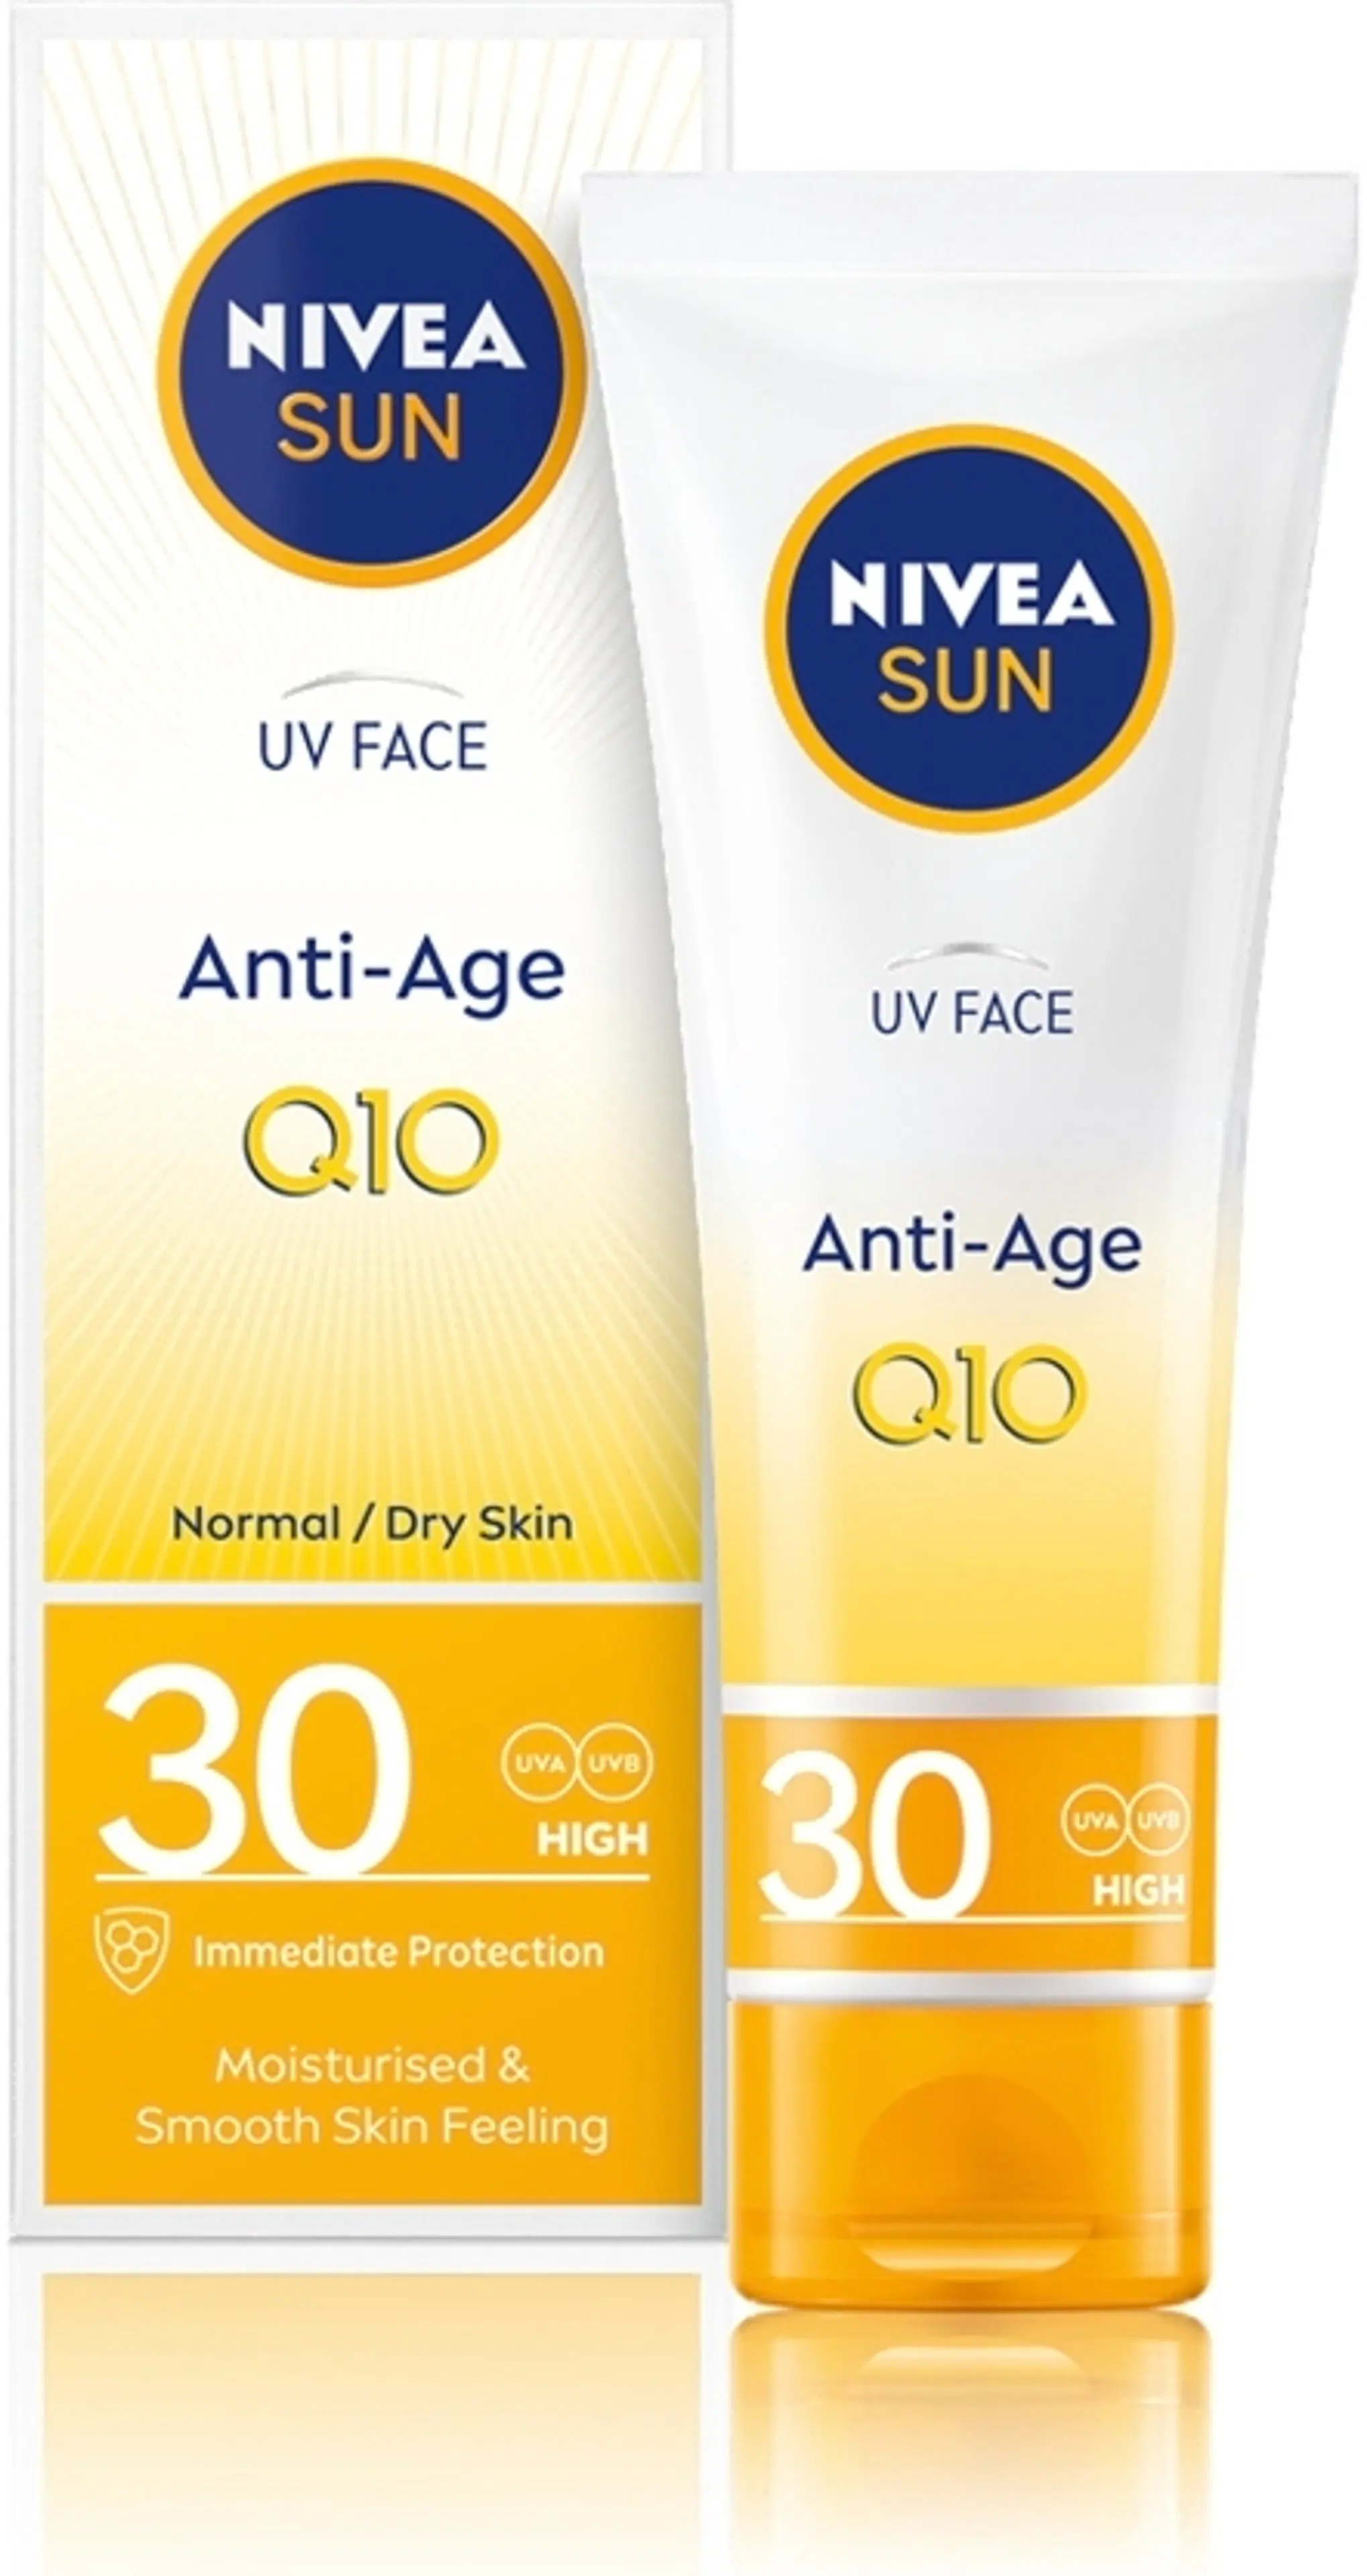 NIVEA SUN 50ml UV Face Anti-Age Q10 SK30 -aurinkovoide